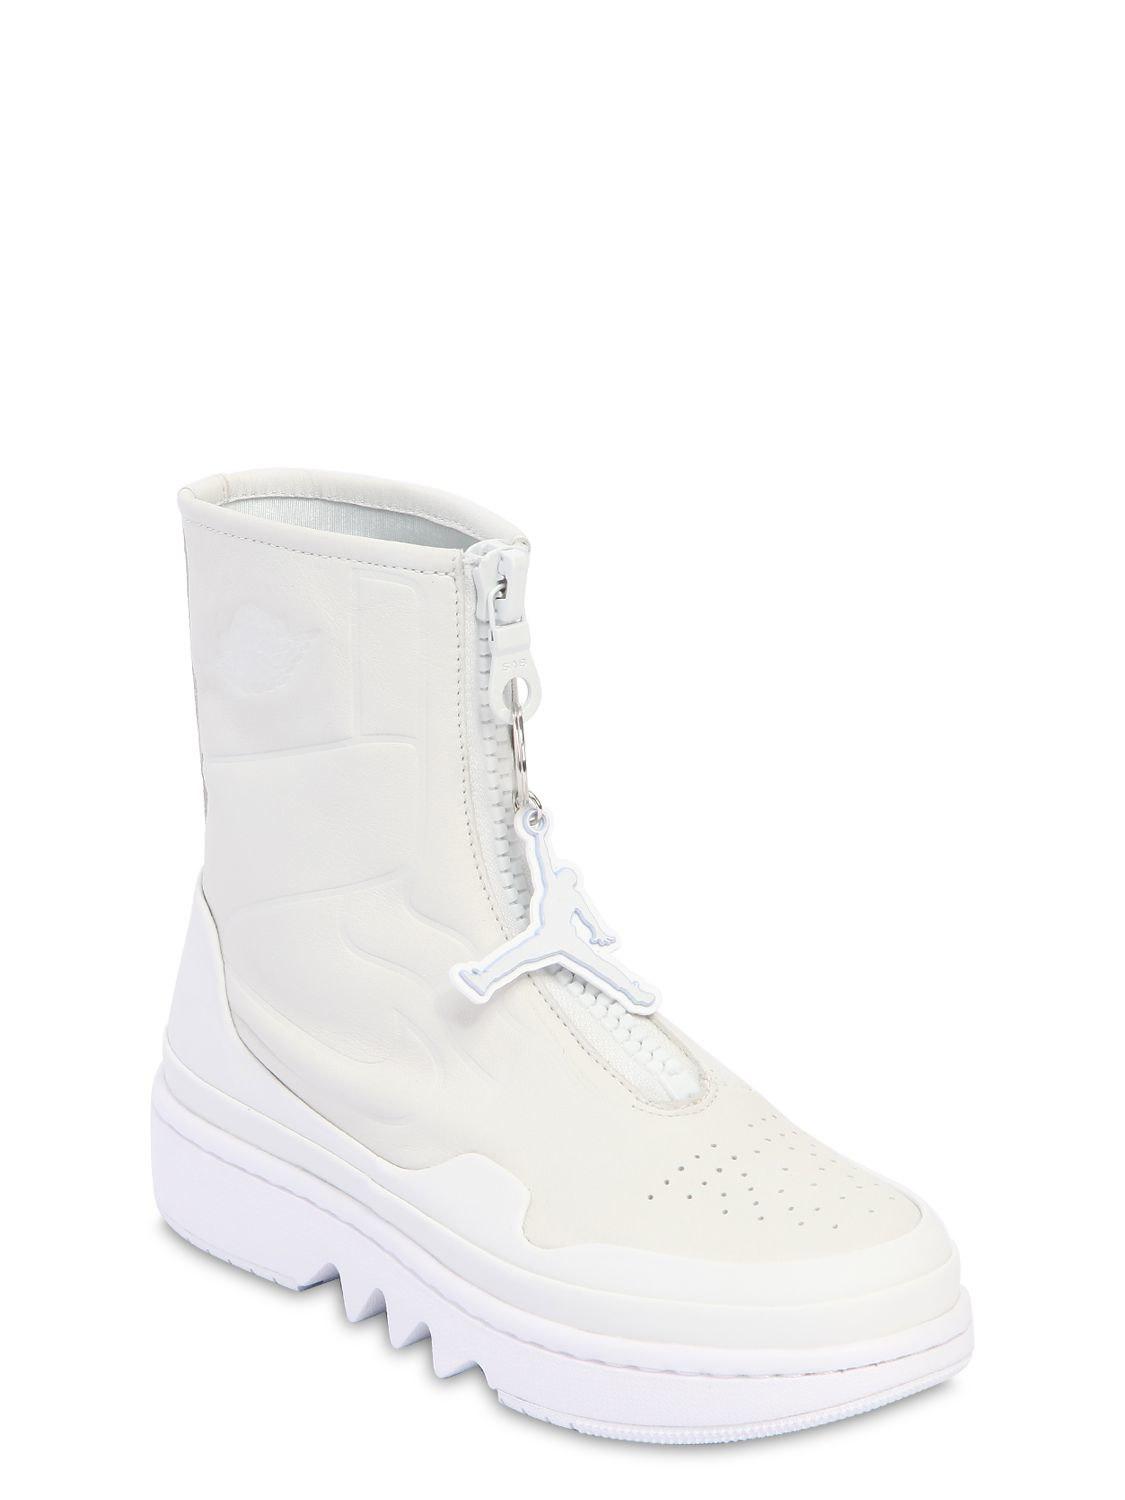 Nike Air Jordan 1 Jester Xx High Top Sneakers in White | Lyst